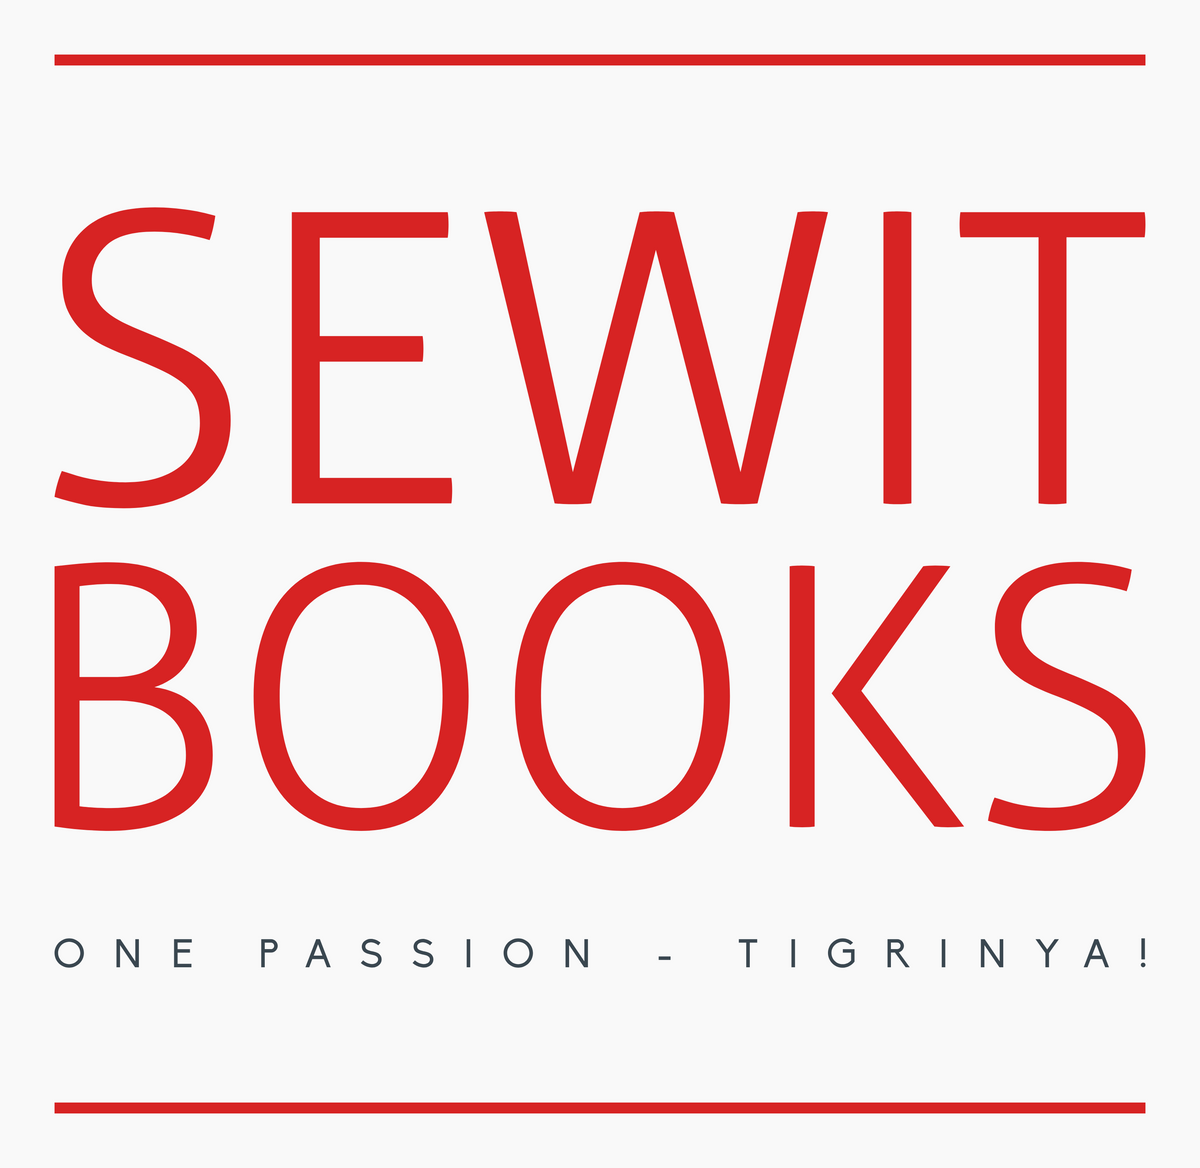 Sewit Books